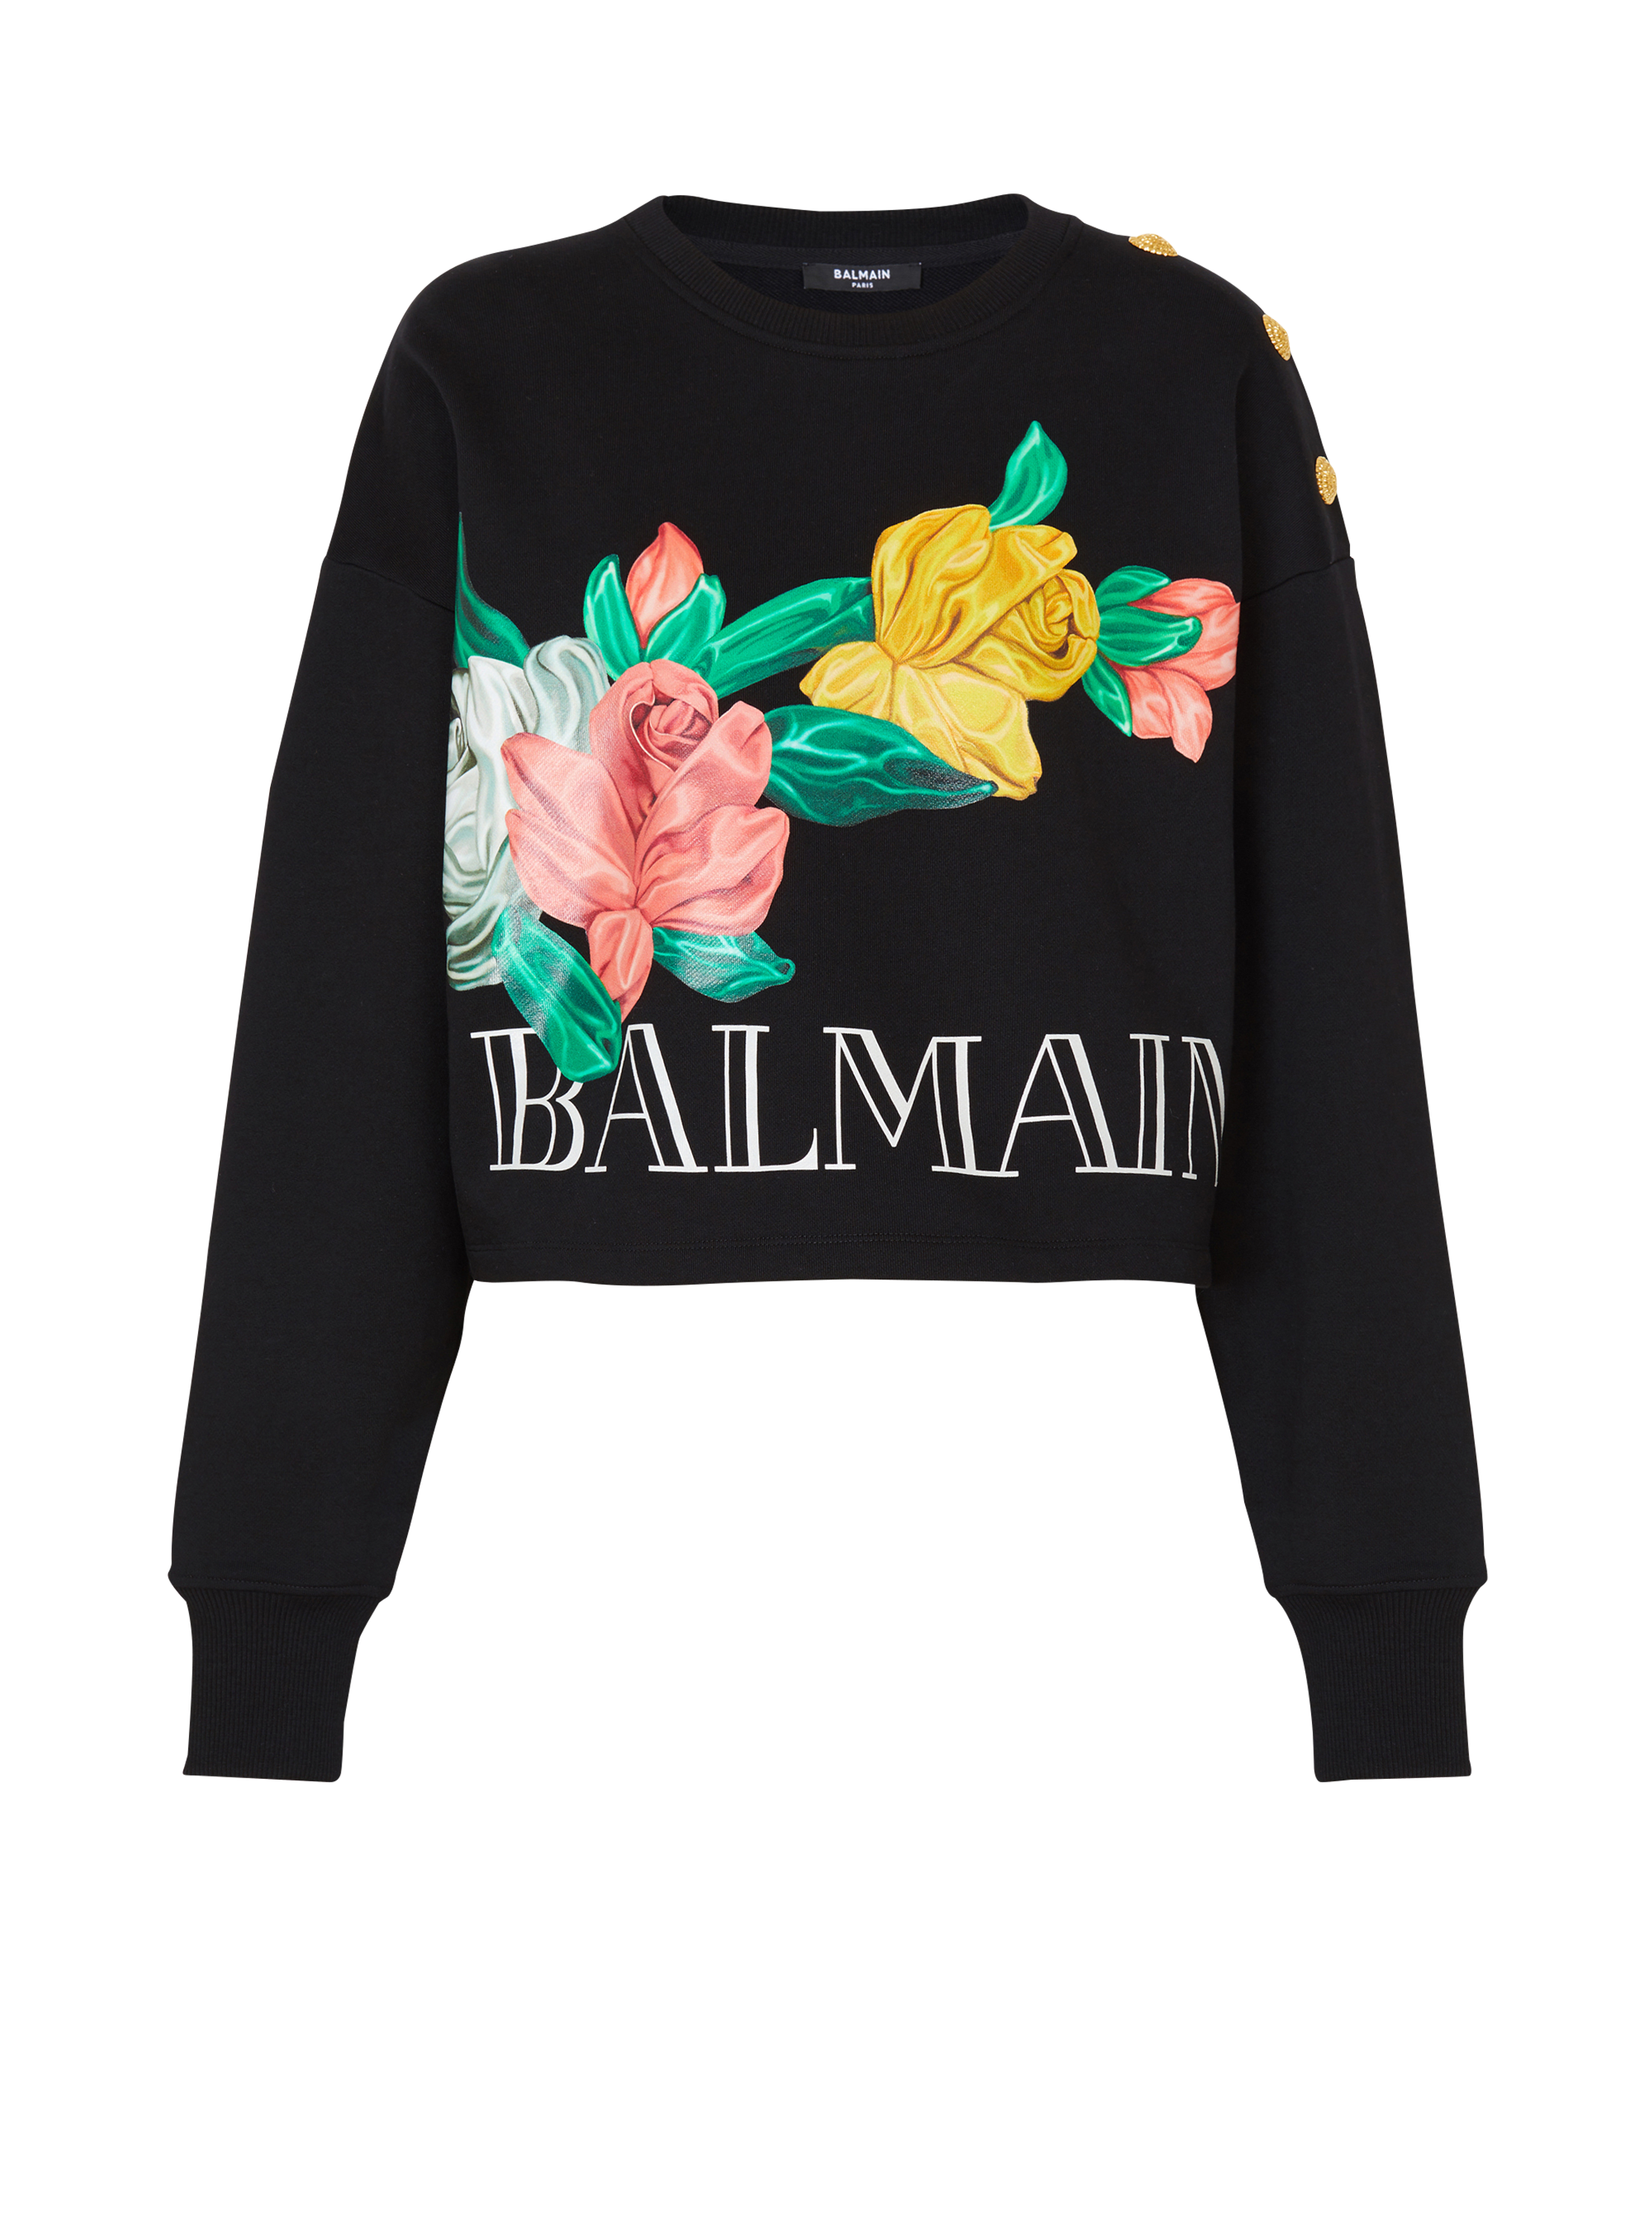 Balmain Vintage-Sweatshirt mit Rosen-Print, schwarz, hi-res